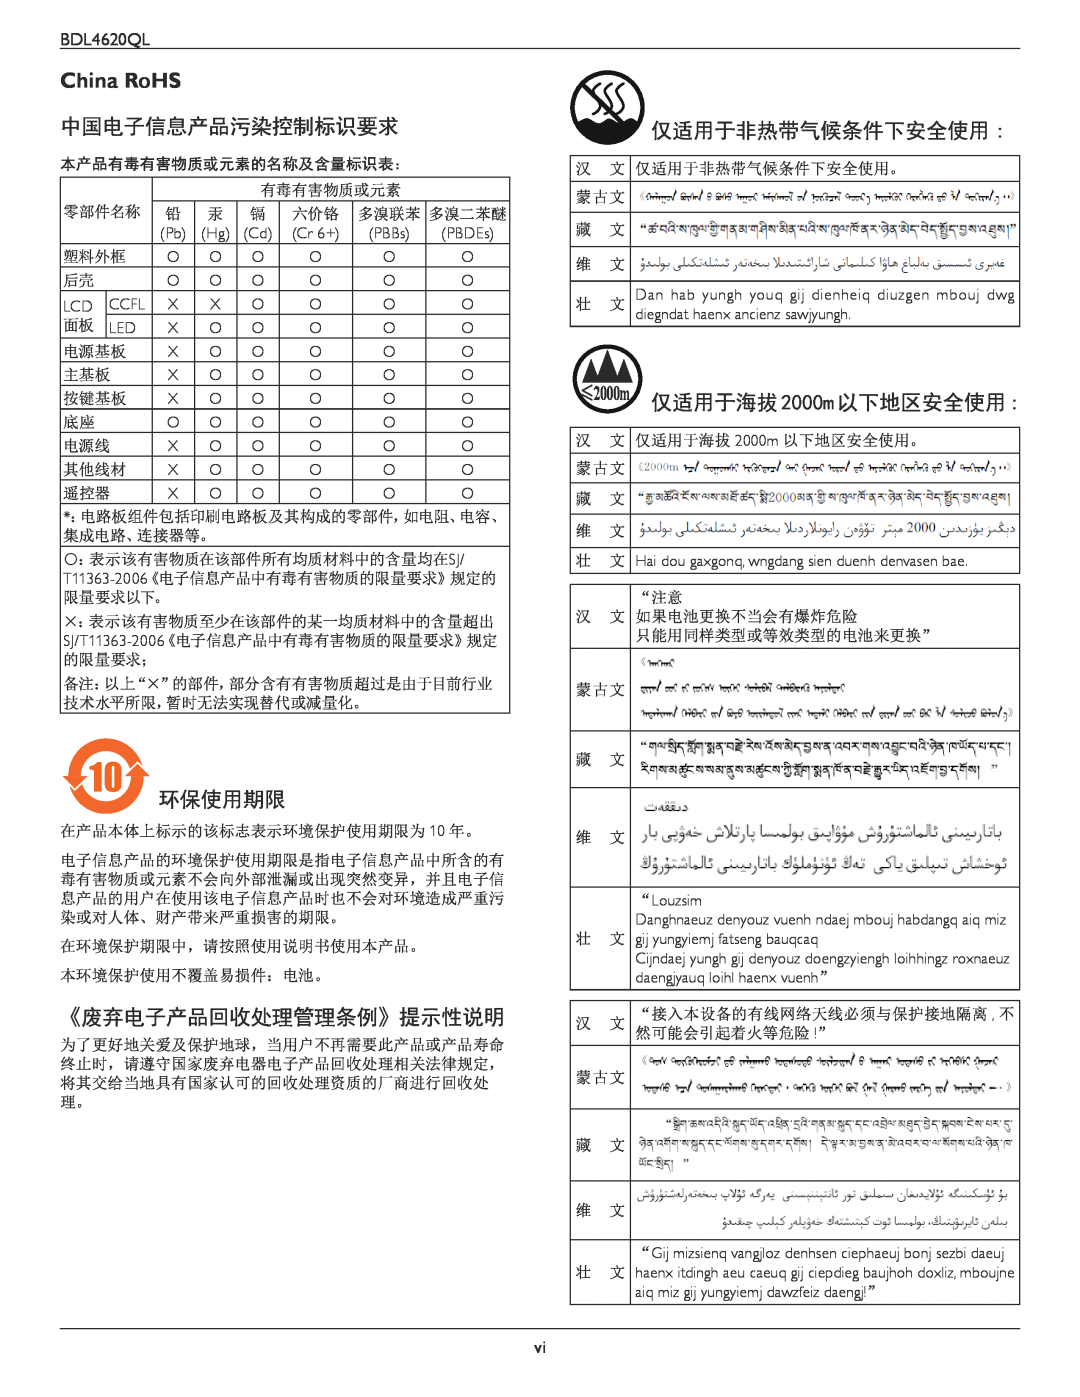 Philips BDL4620QL user manual China RoHS, 中国电子信息产品污染控制标识要求, 环保使用期限, 《废弃电子产品回收处理管理条例》提示性说明, 仅适用于非热带气候条件下安全使用 